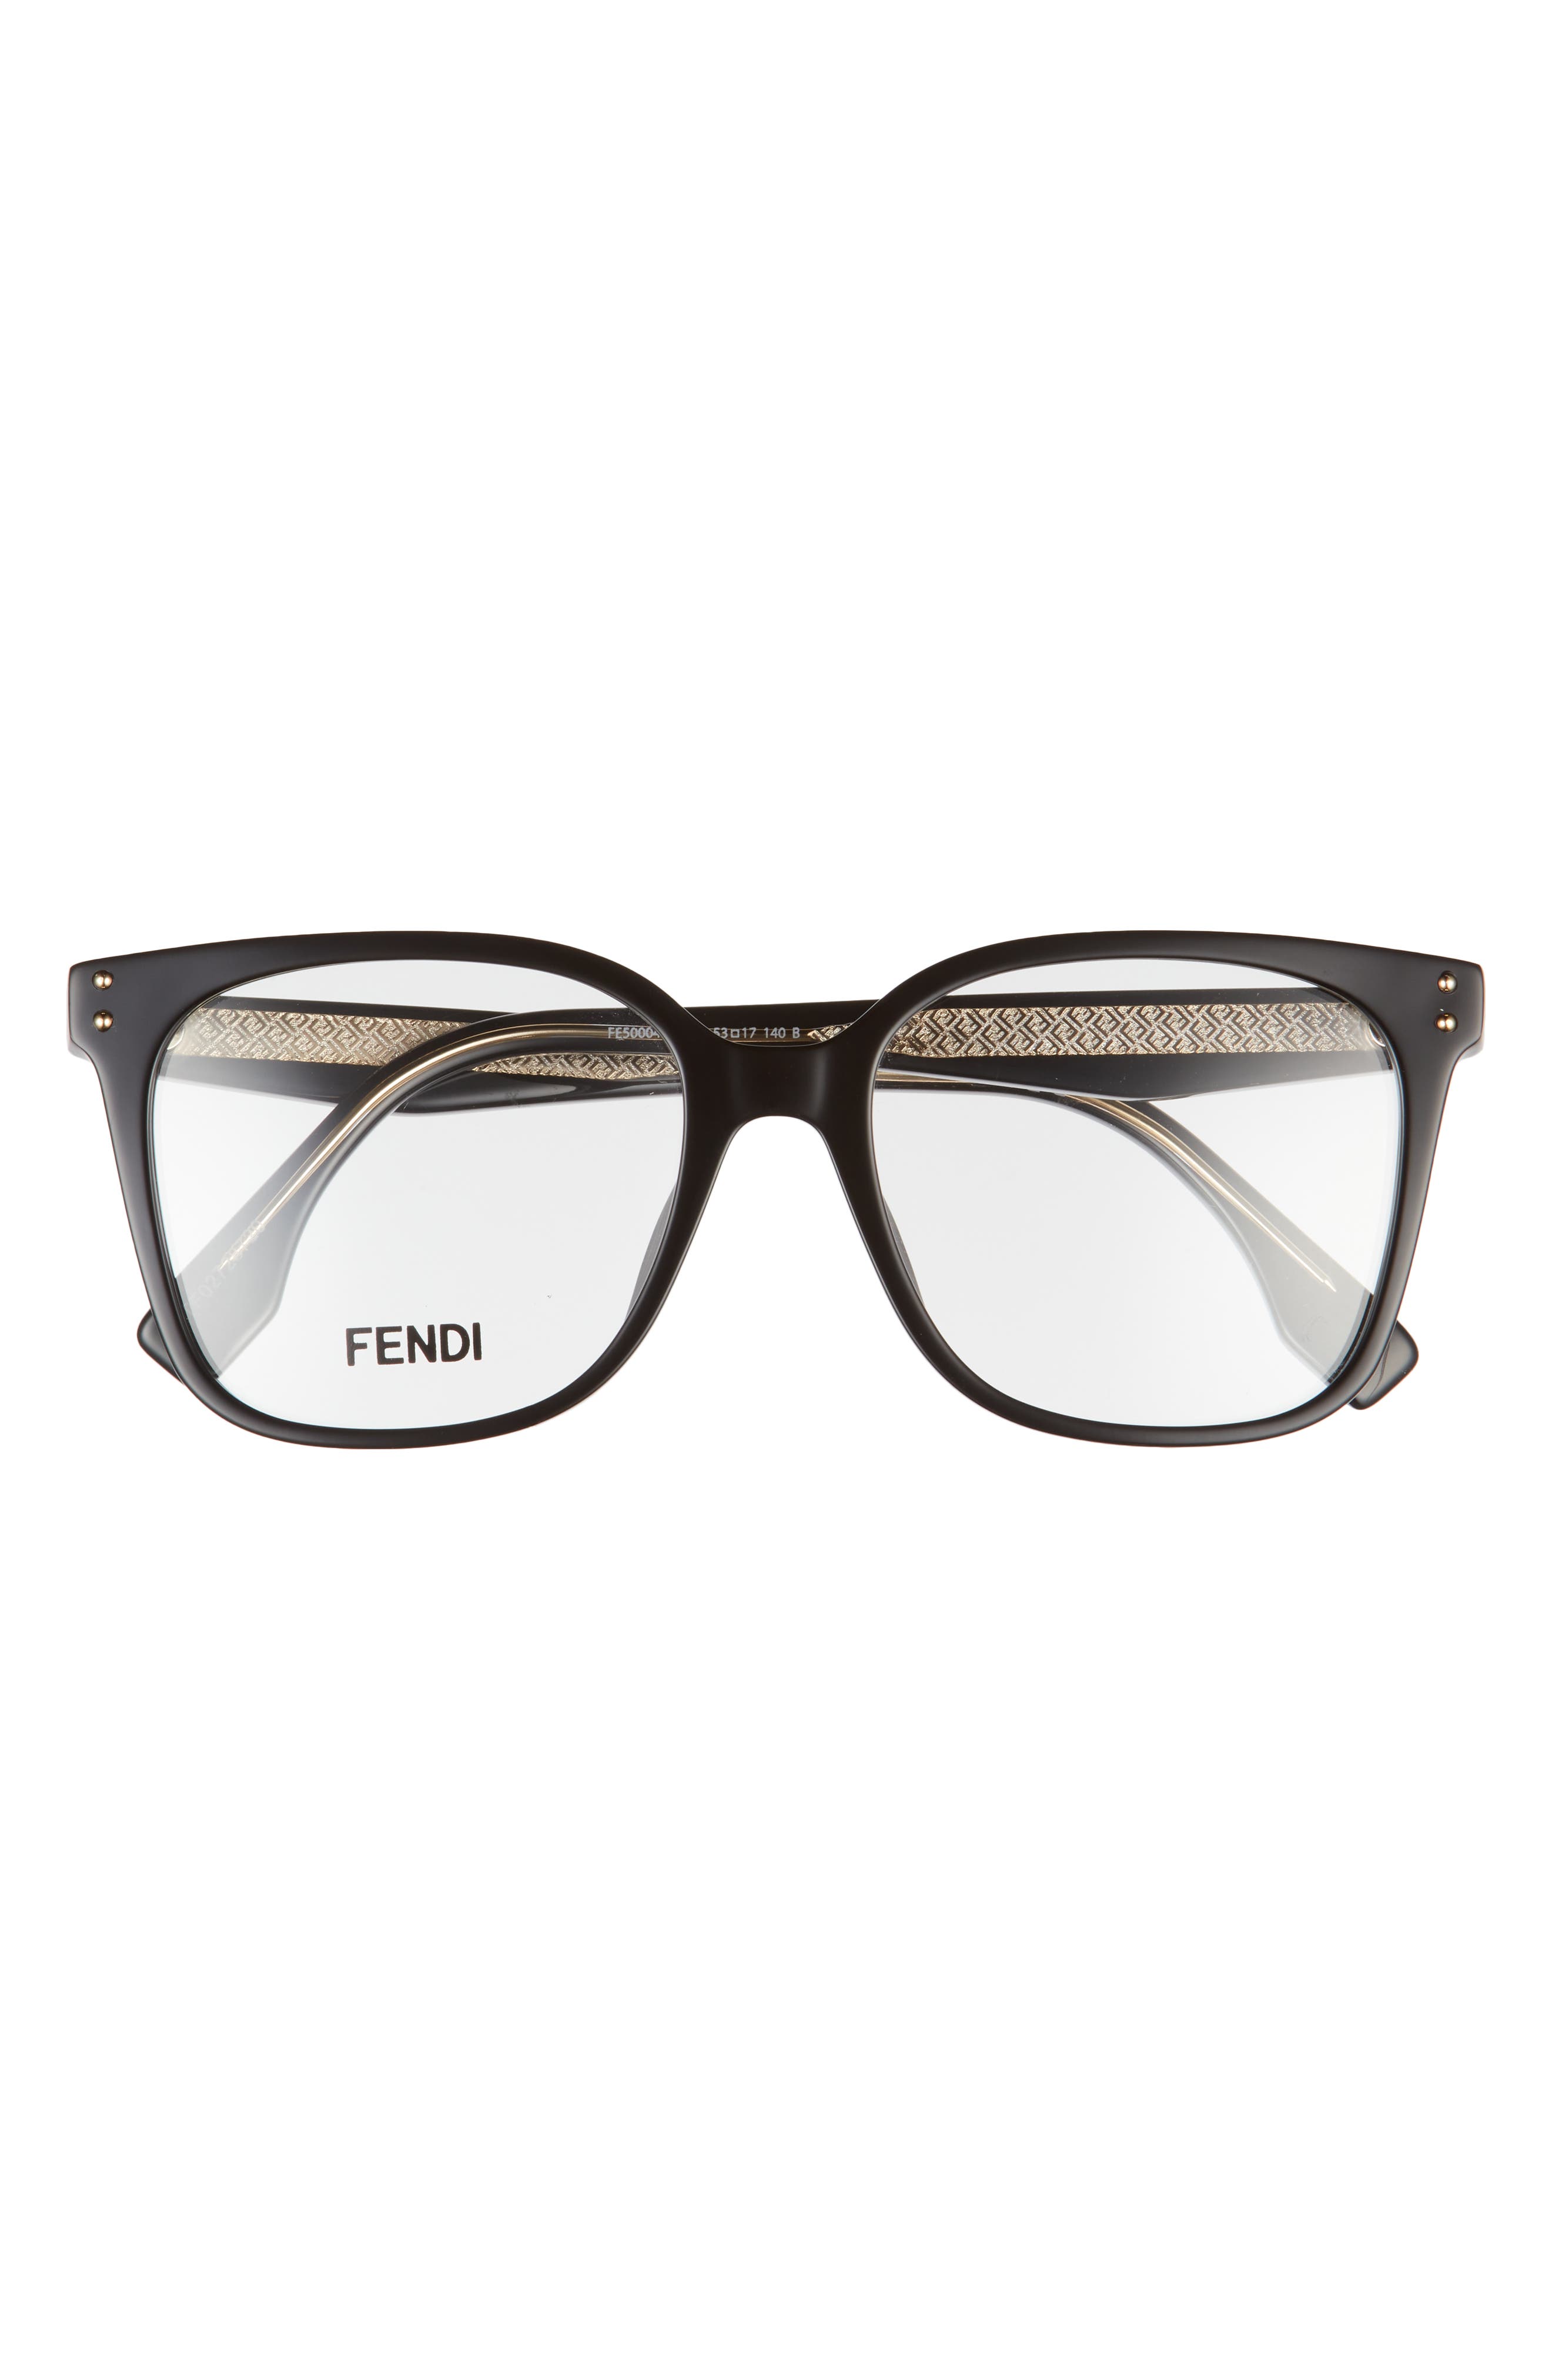 Fendi 53m Square Optical Glasses in Shiny Black at Nordstrom